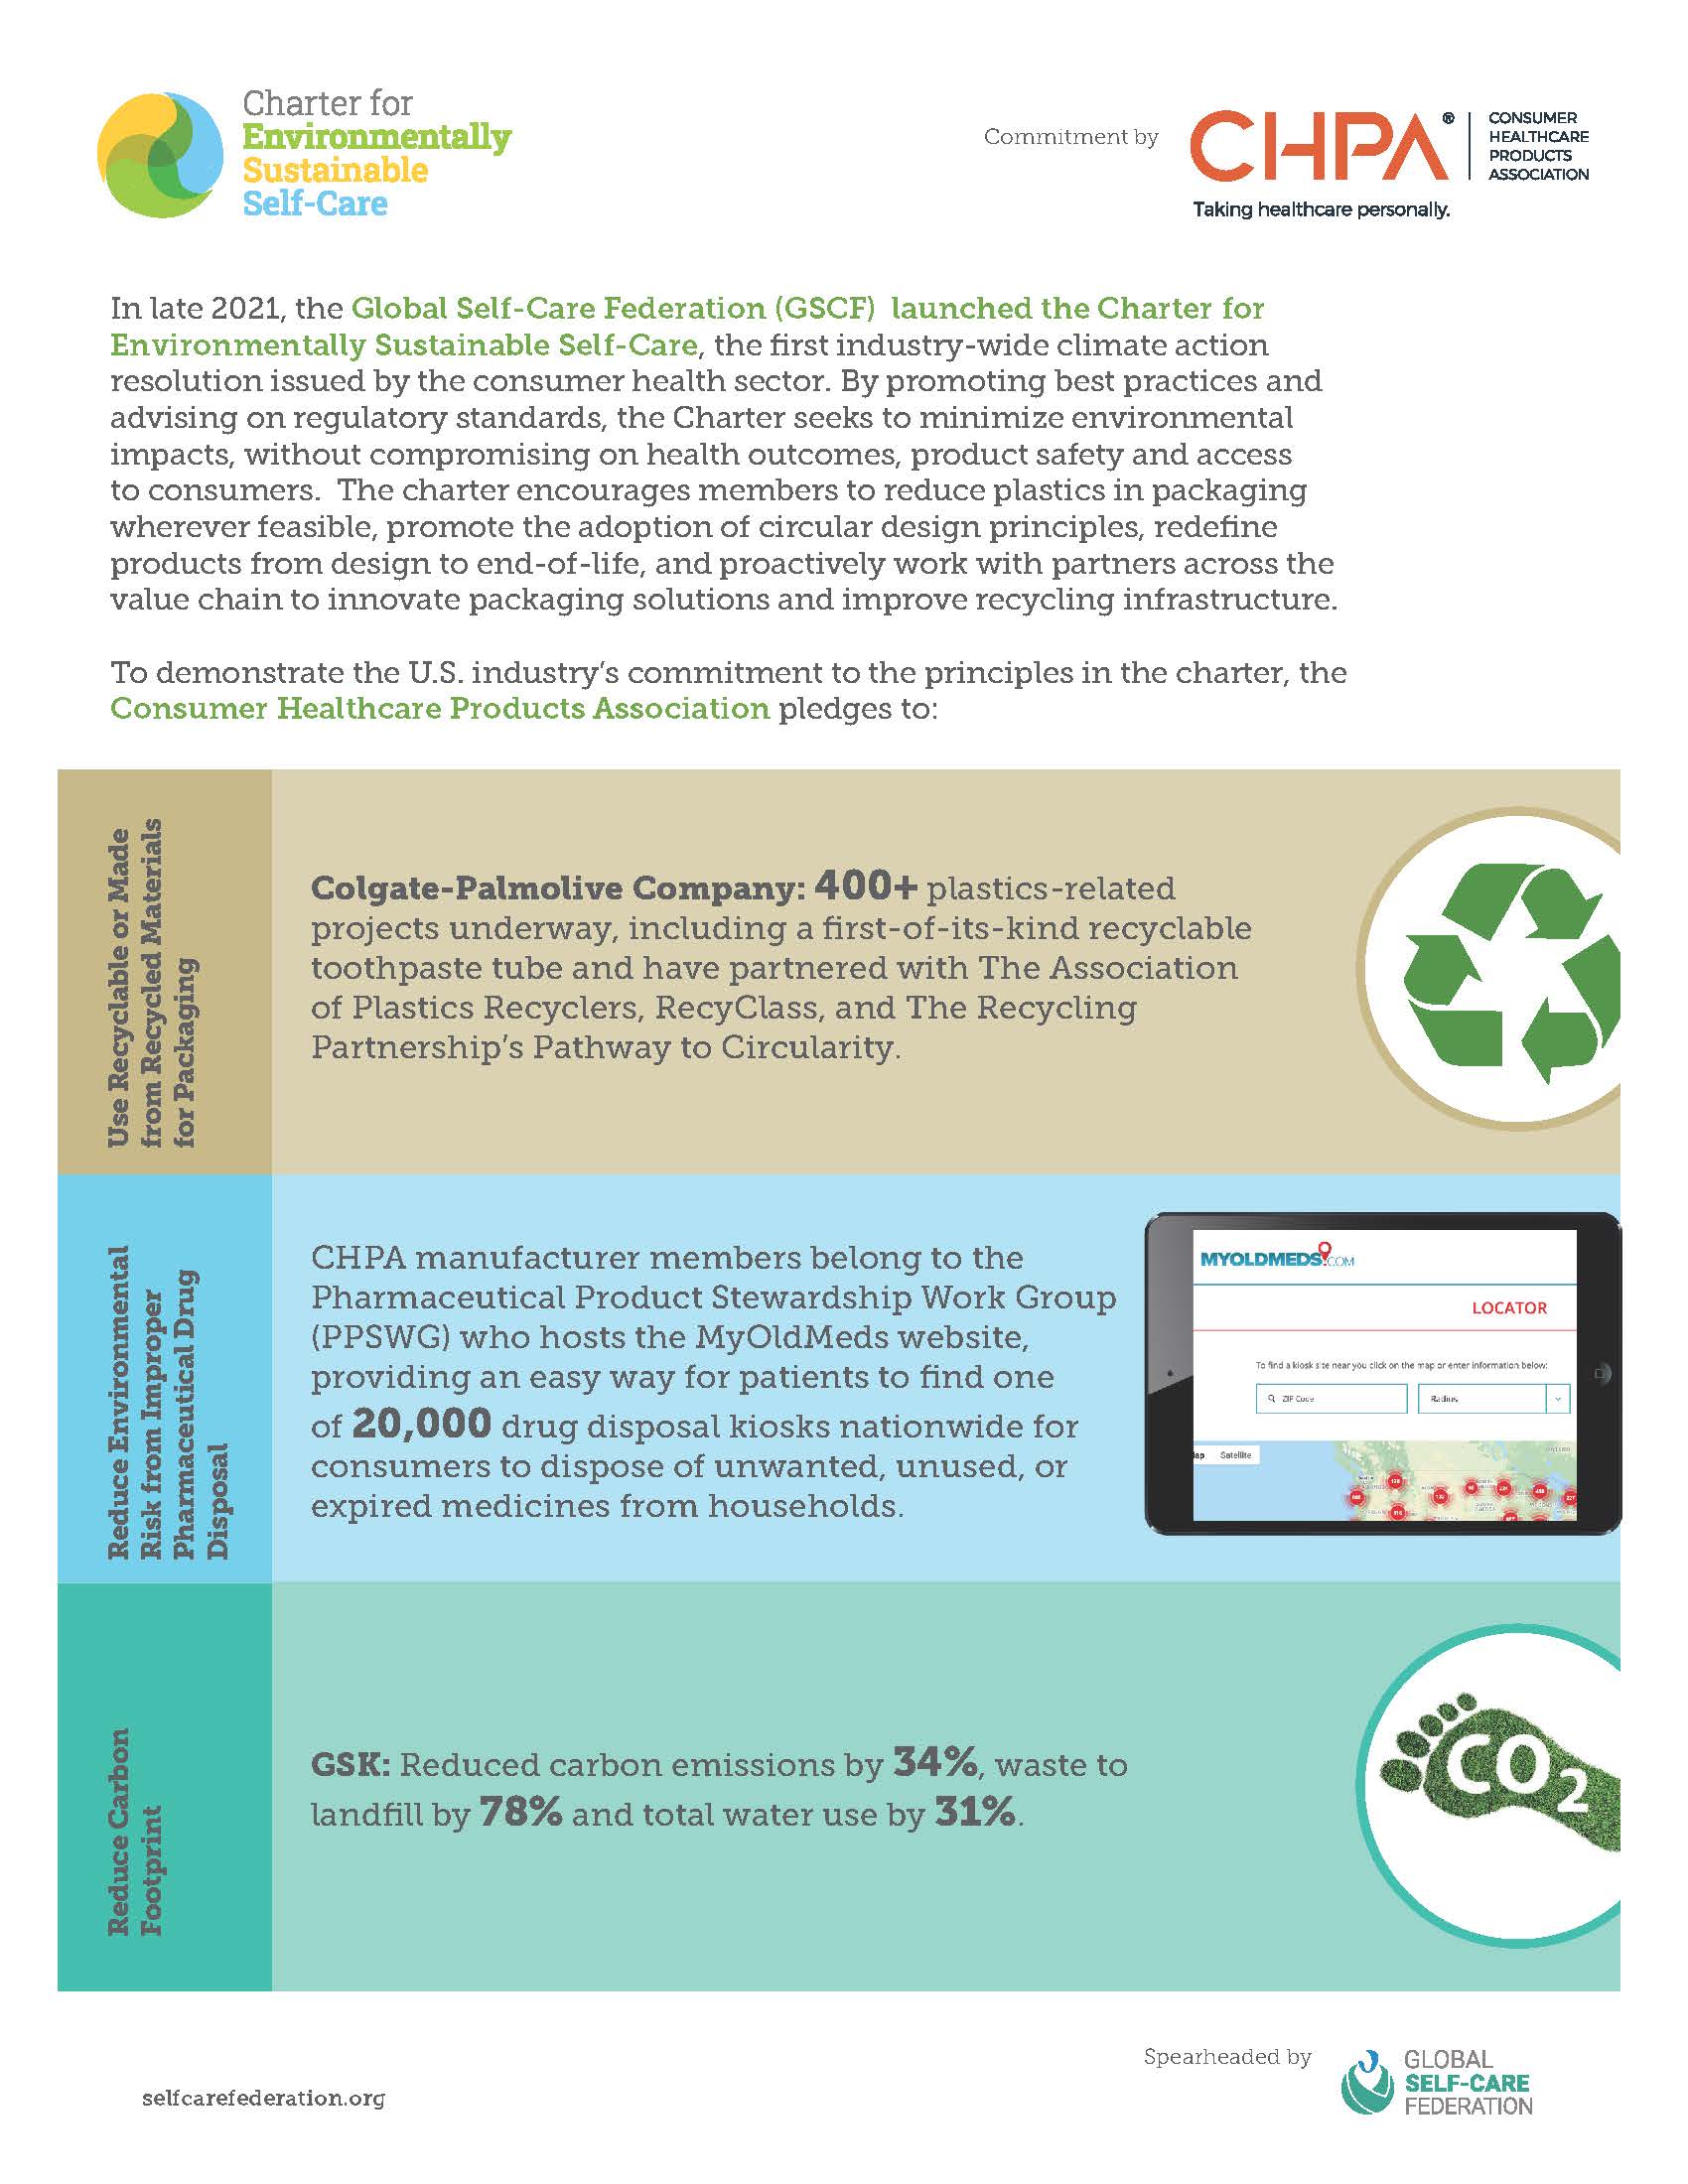 CHPA's Sustainability Pledge